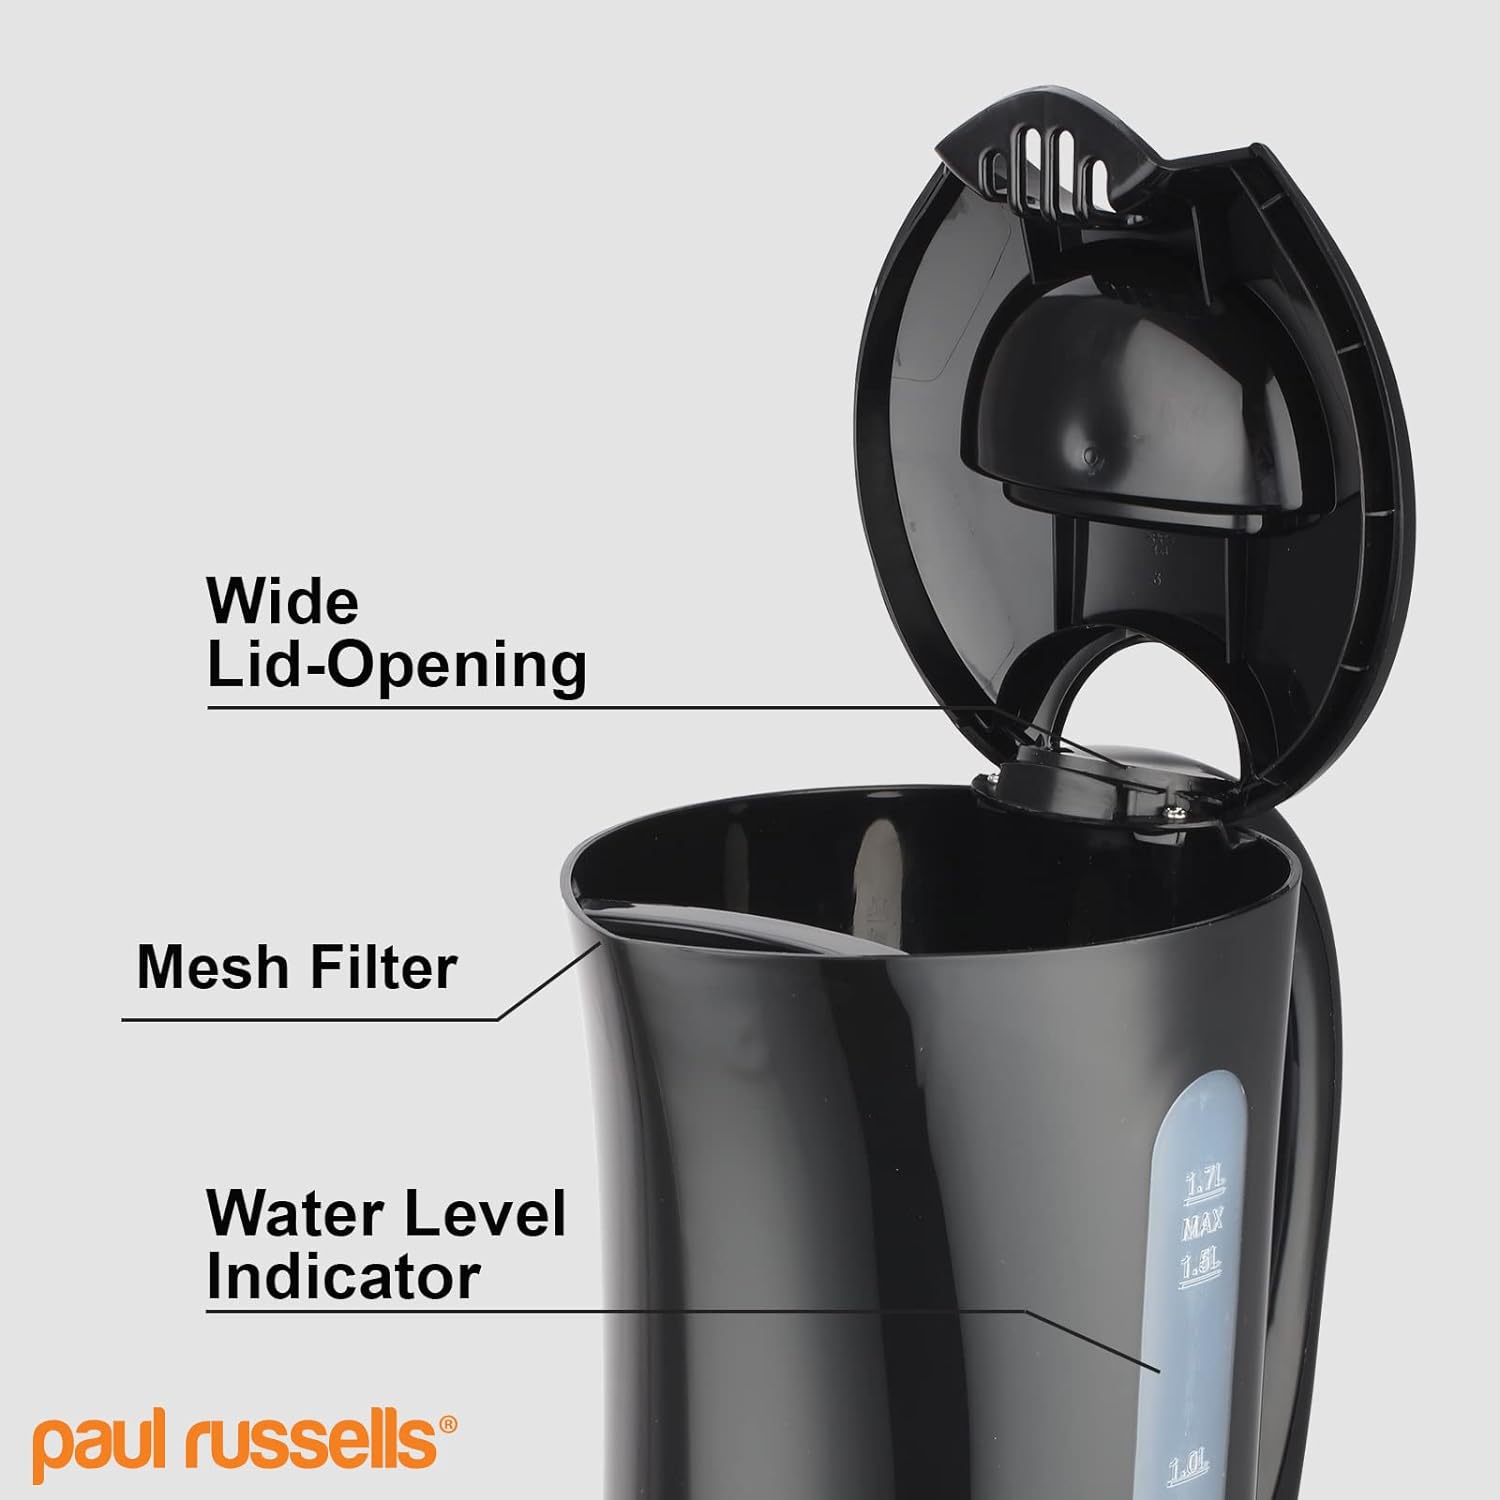 paul russells Electric Plastic Kettle, 2200W 1.7L, Hot water dispenser, Black Boil - Dry Protection, Auto Shut off Stirx Control - Amazing Gadgets Outlet